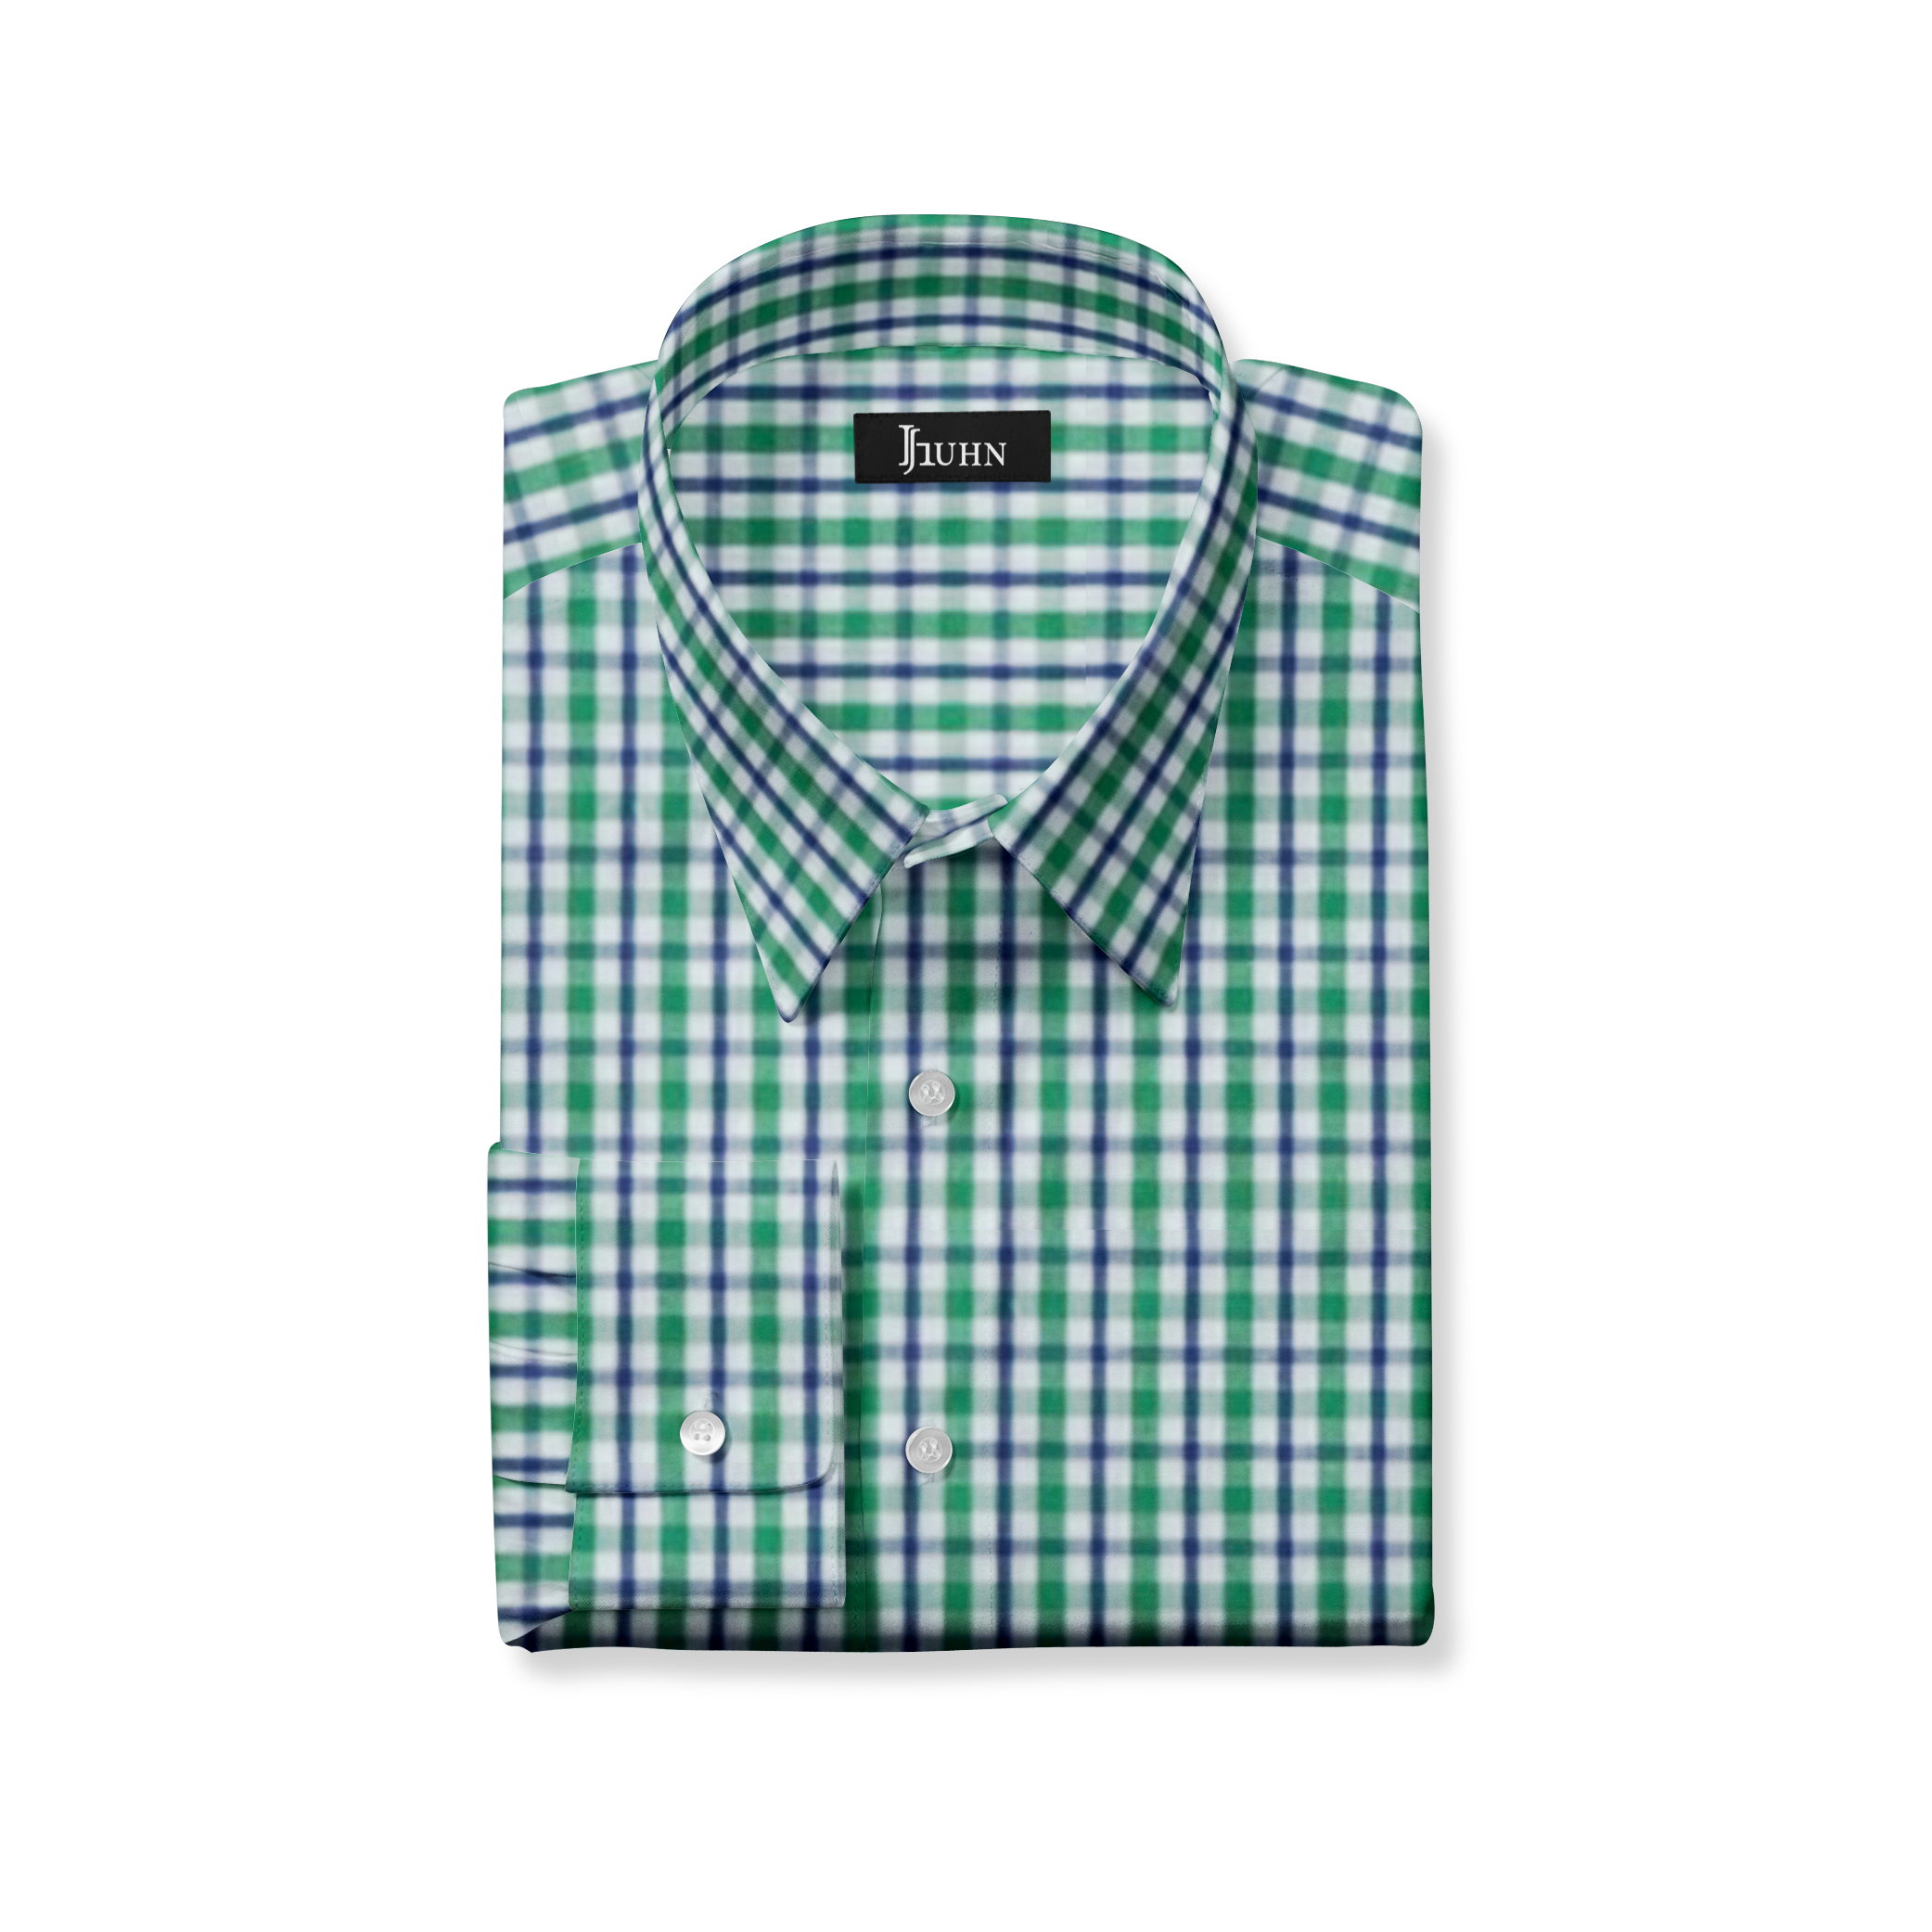 Wrinkle Resistant Men's Shirt in Green & Blue Plaid